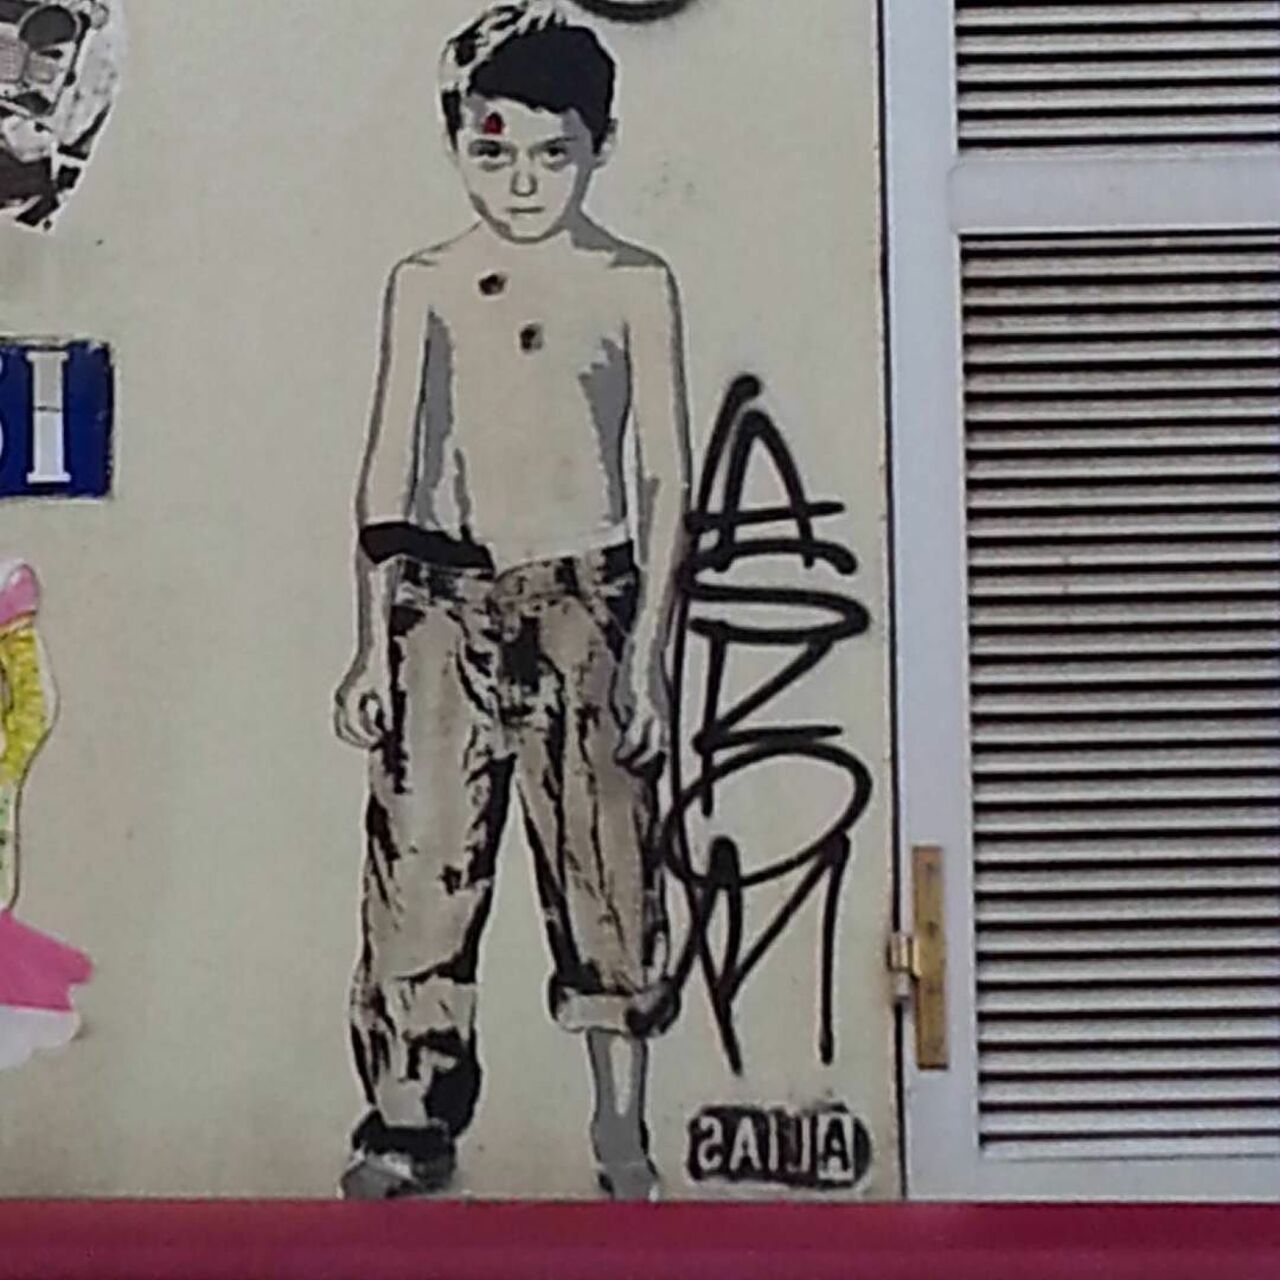 #Paris #graffiti photo by @fotoflaneuse http://ift.tt/1jzocYt #StreetArt https://t.co/g0Aau8fIw2